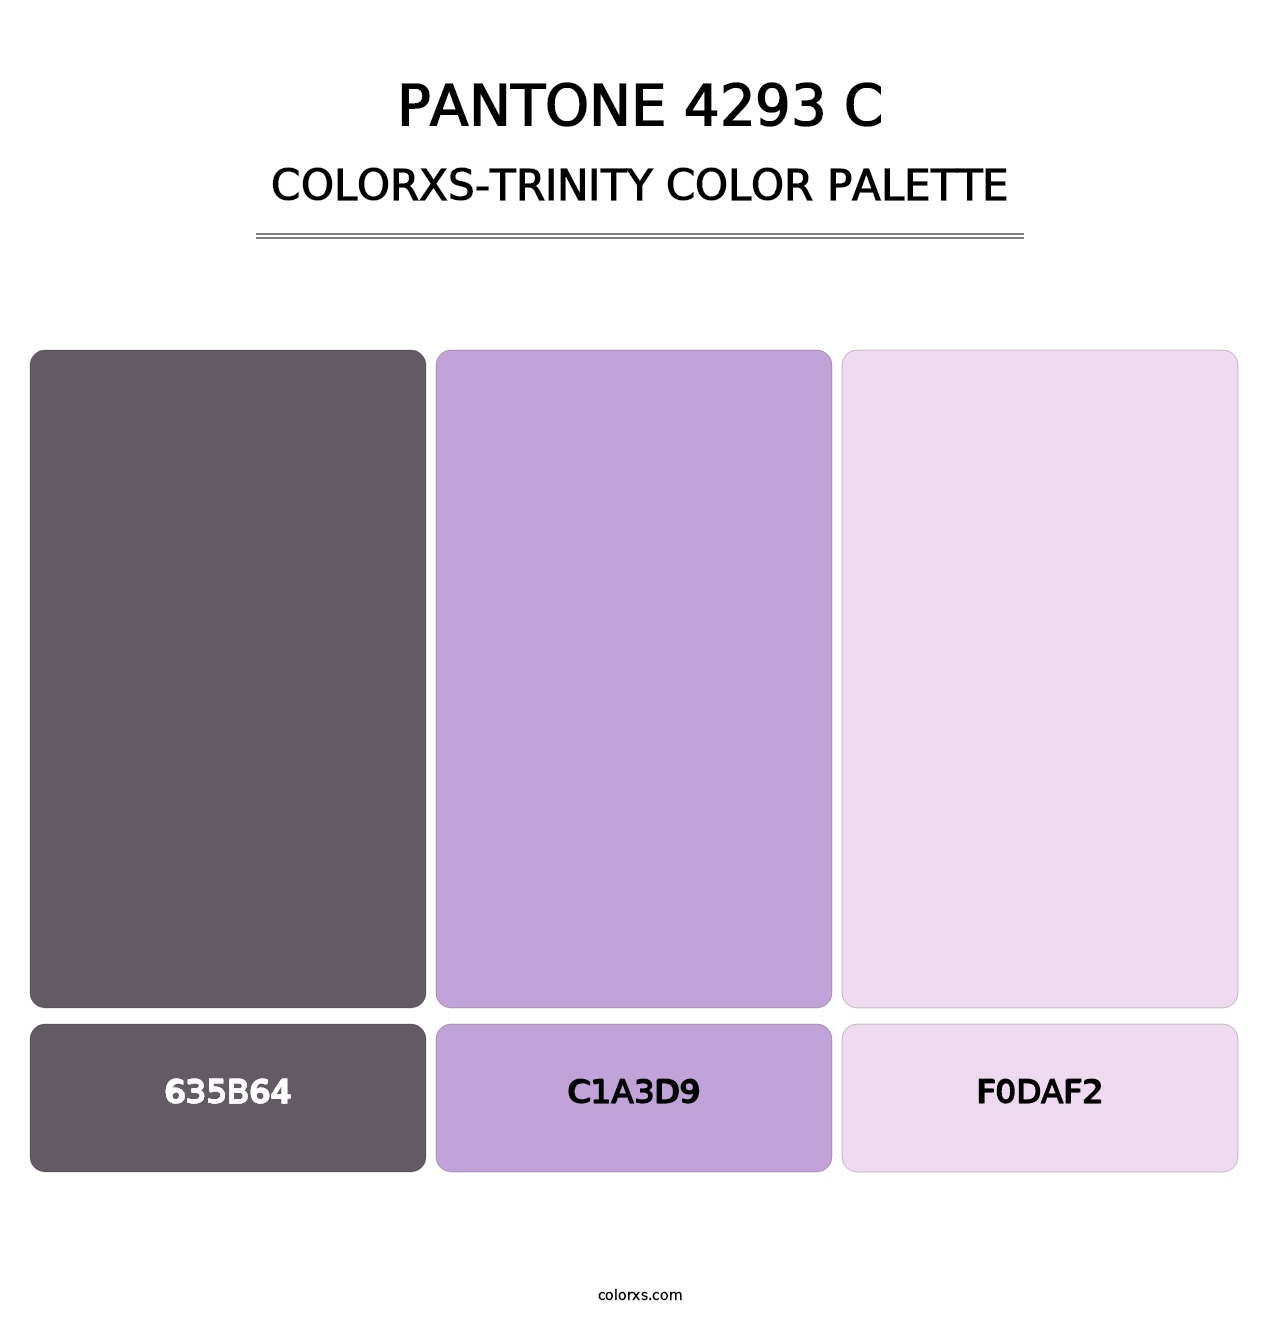 PANTONE 4293 C - Colorxs Trinity Palette